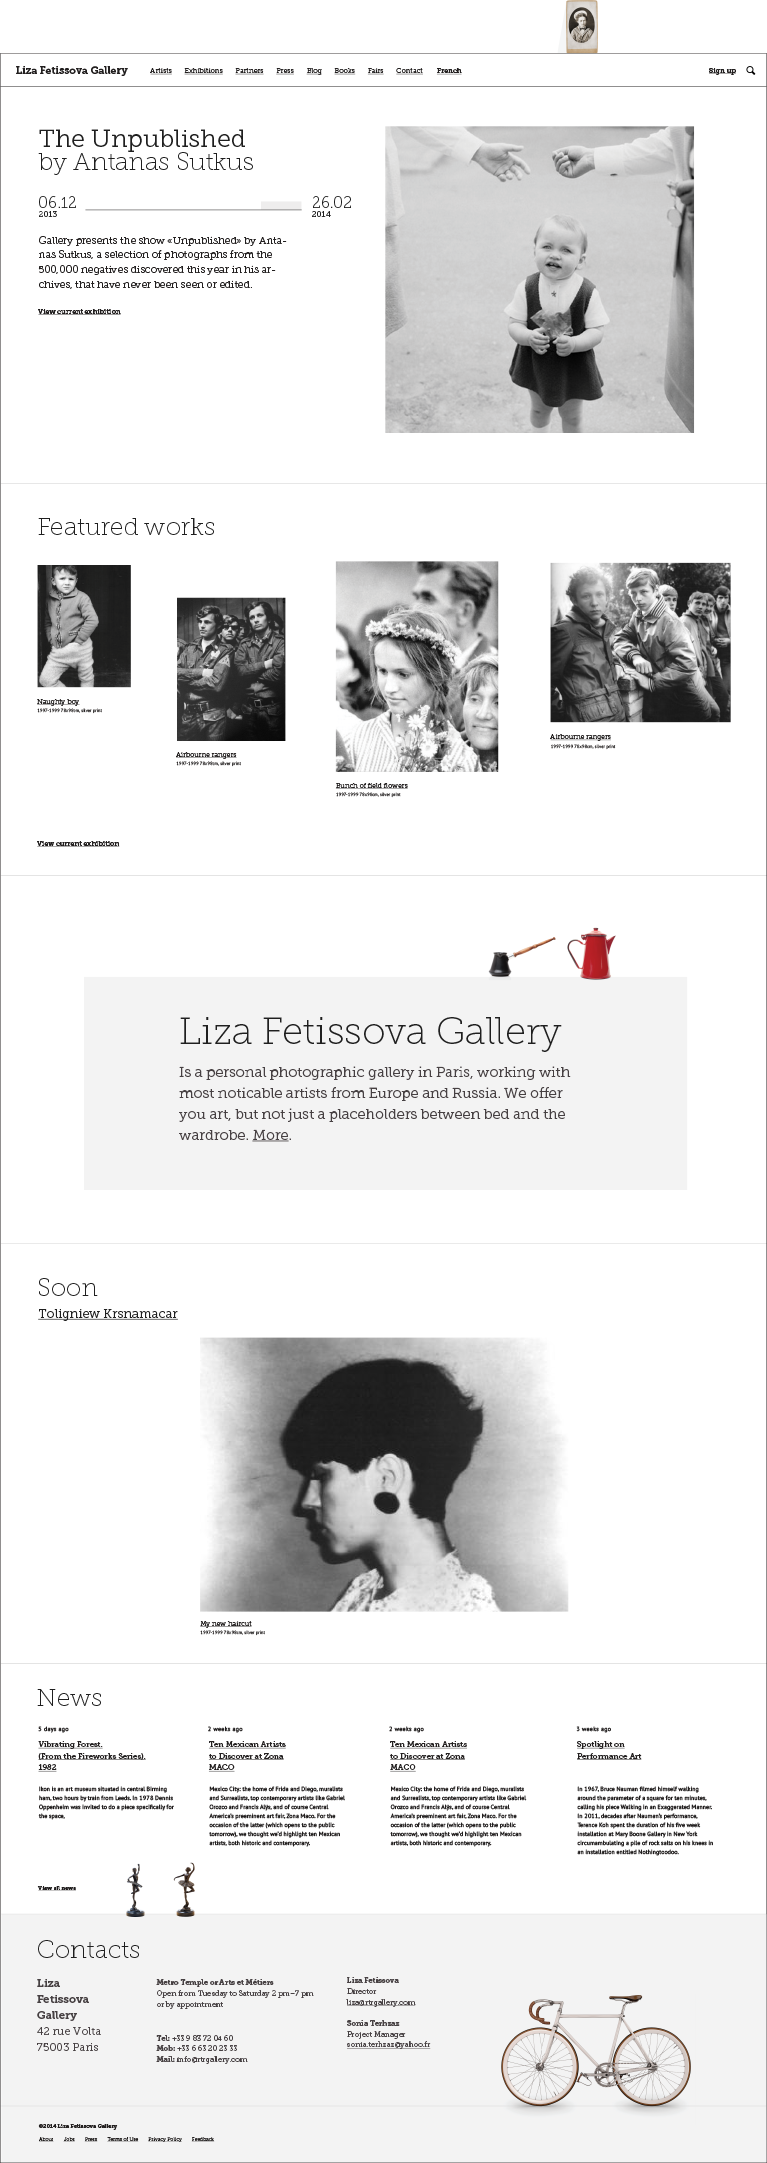 liza fetissova gallery index page